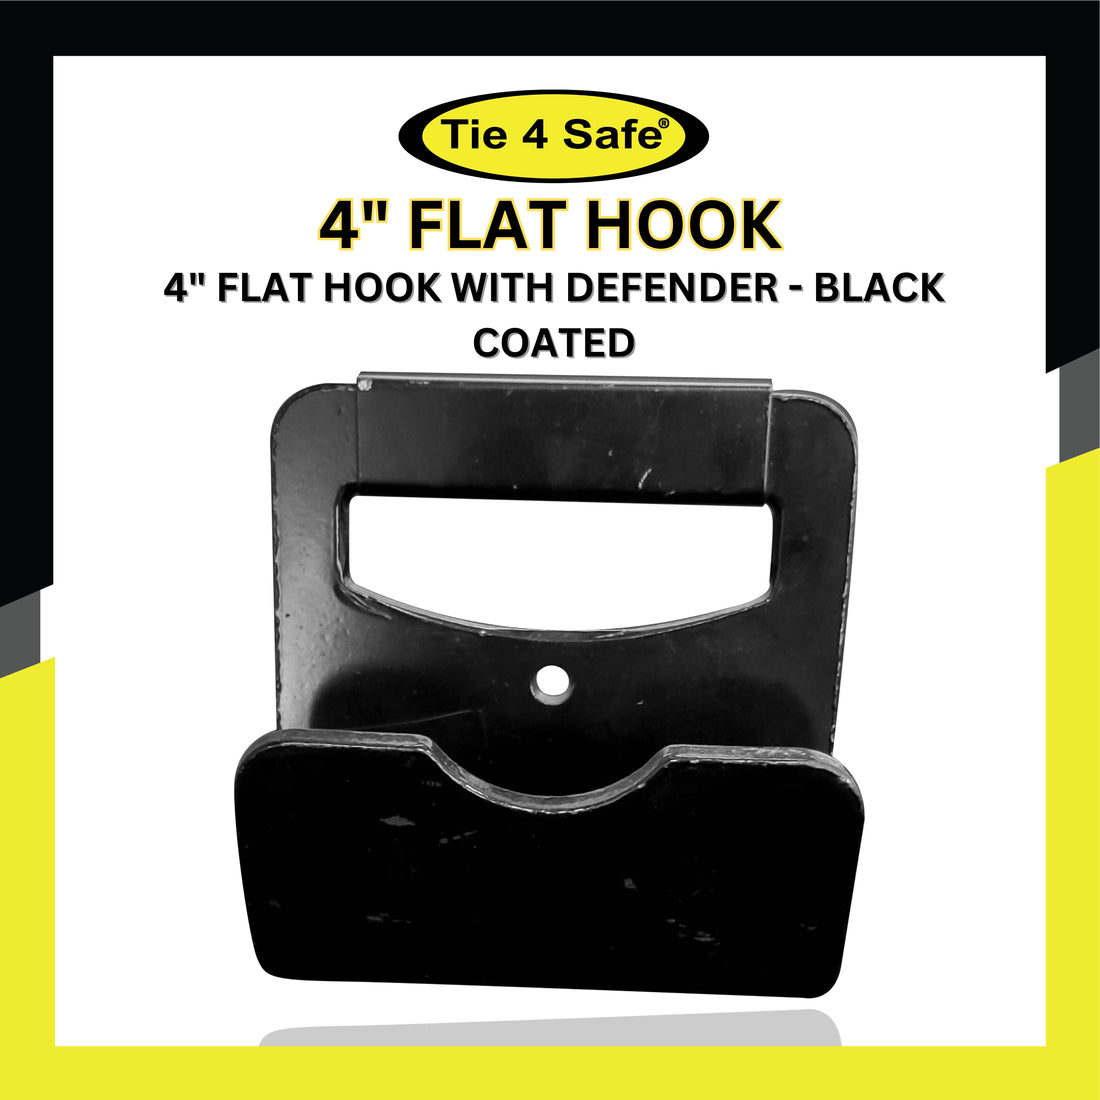 4" Flat Hook With Defender